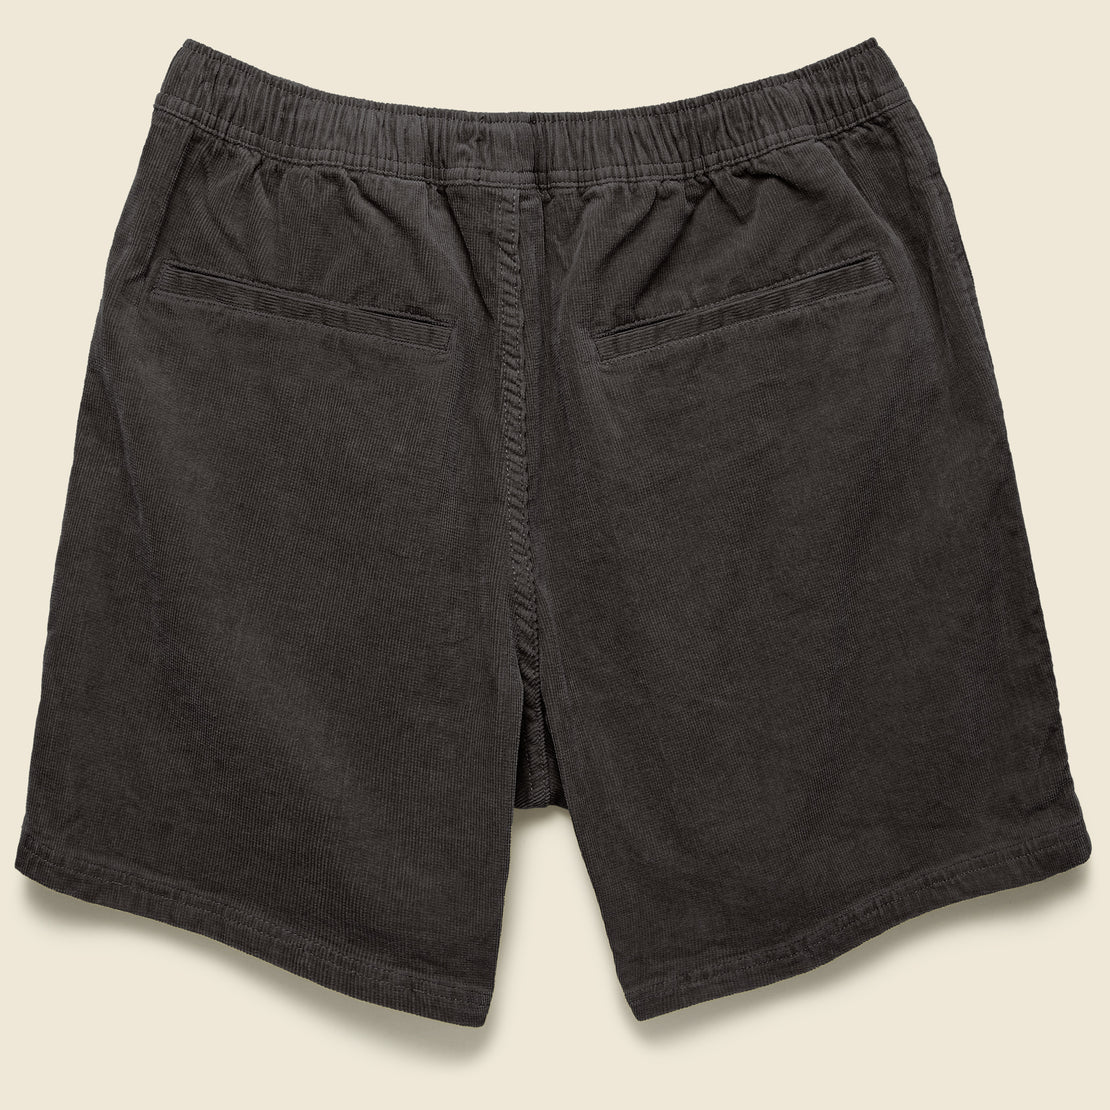 Cord Local Short - Black Wash - Katin - STAG Provisions - Shorts - Lounge